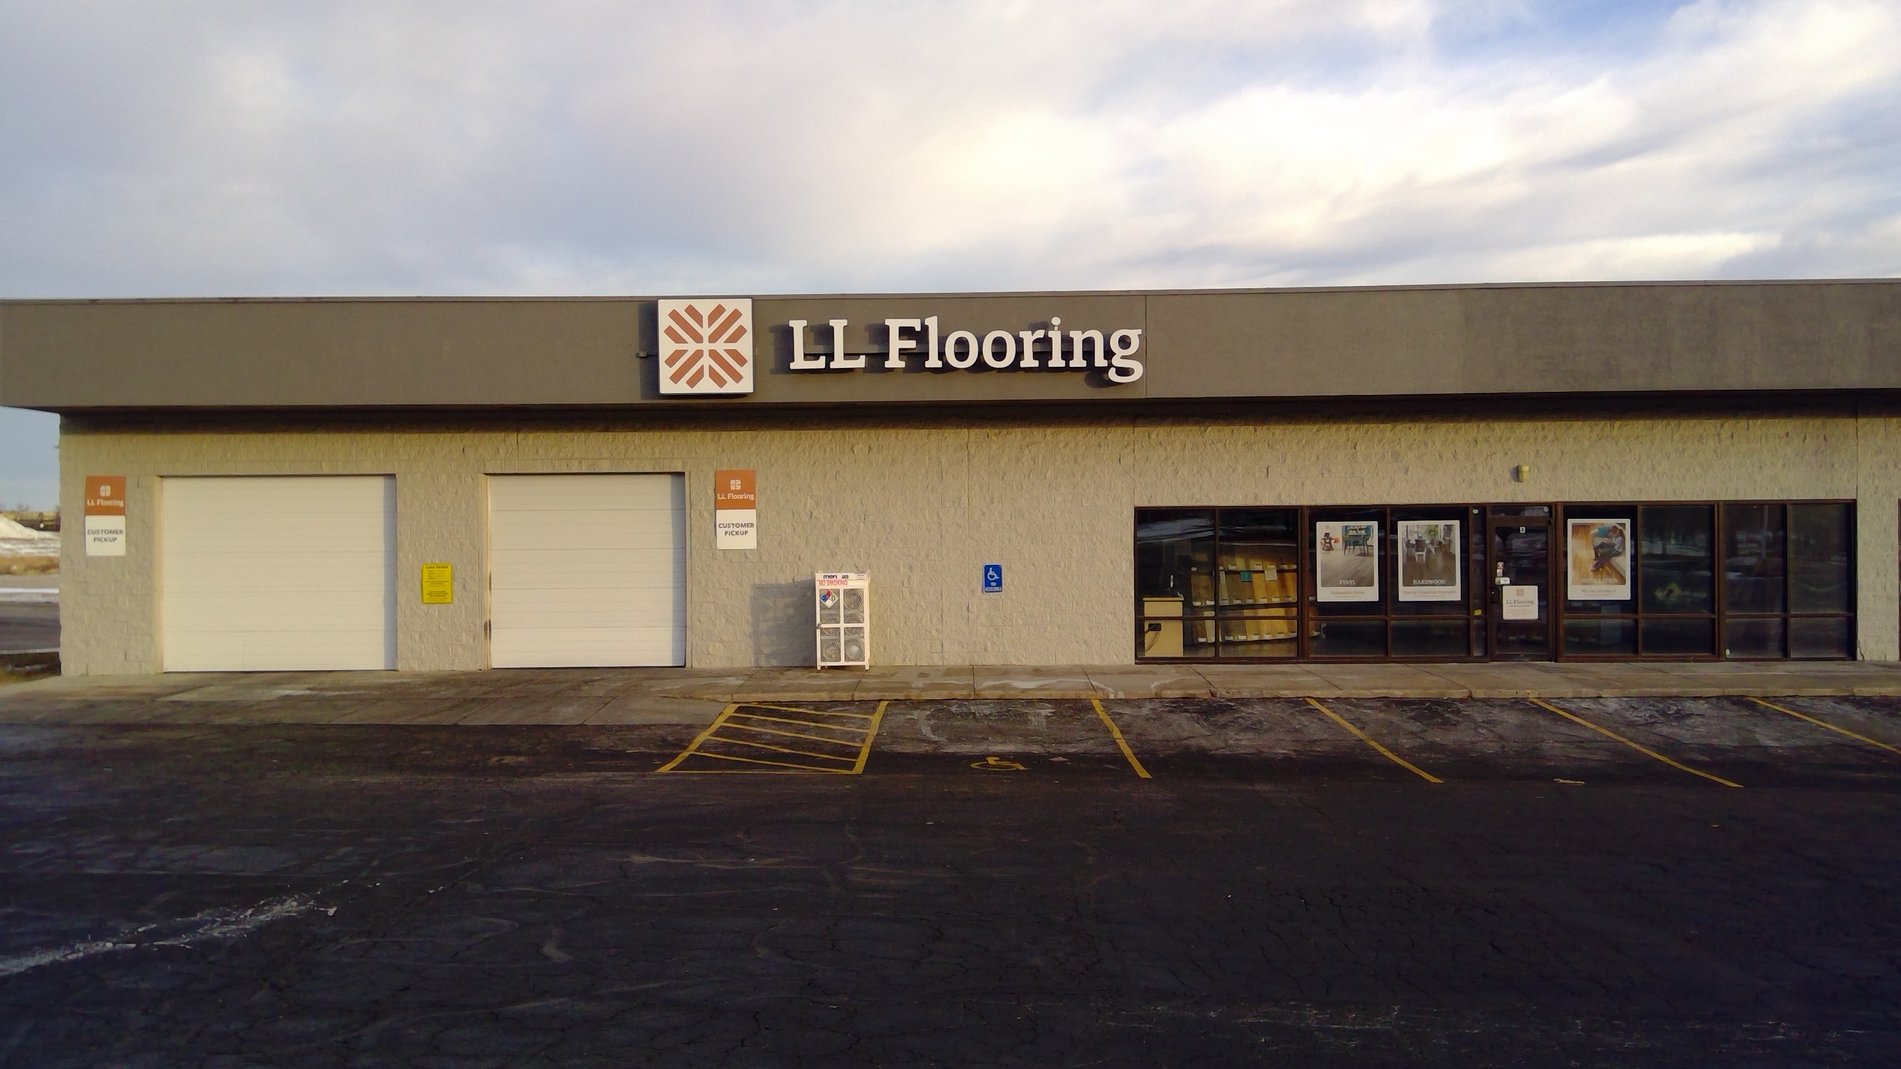 LL Flooring #1185 Lincoln | 6401 Q Street | Storefront